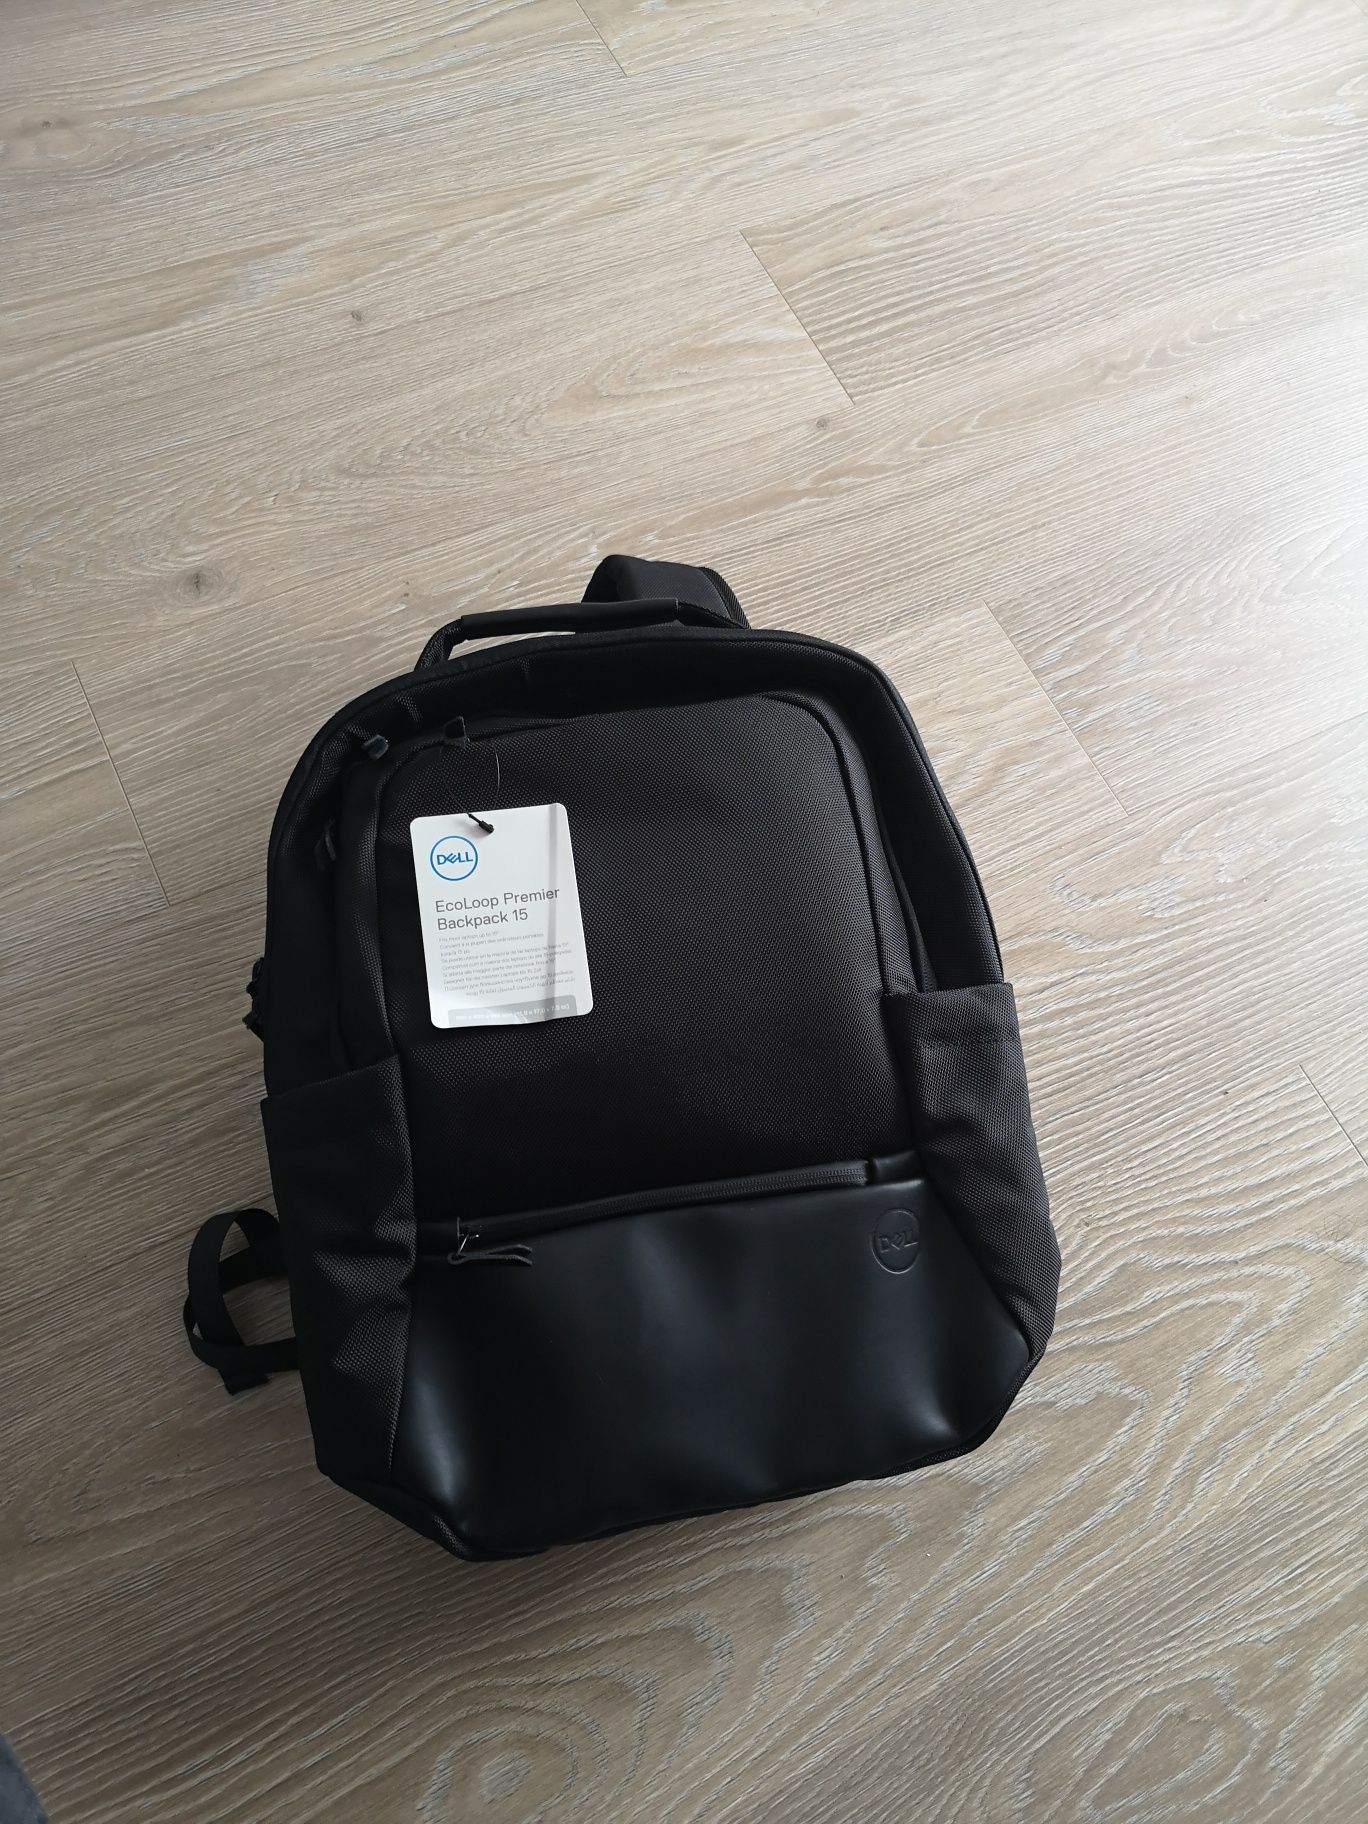 Ghiozdan laptop Dell Ecoloop Premier Backpack 15